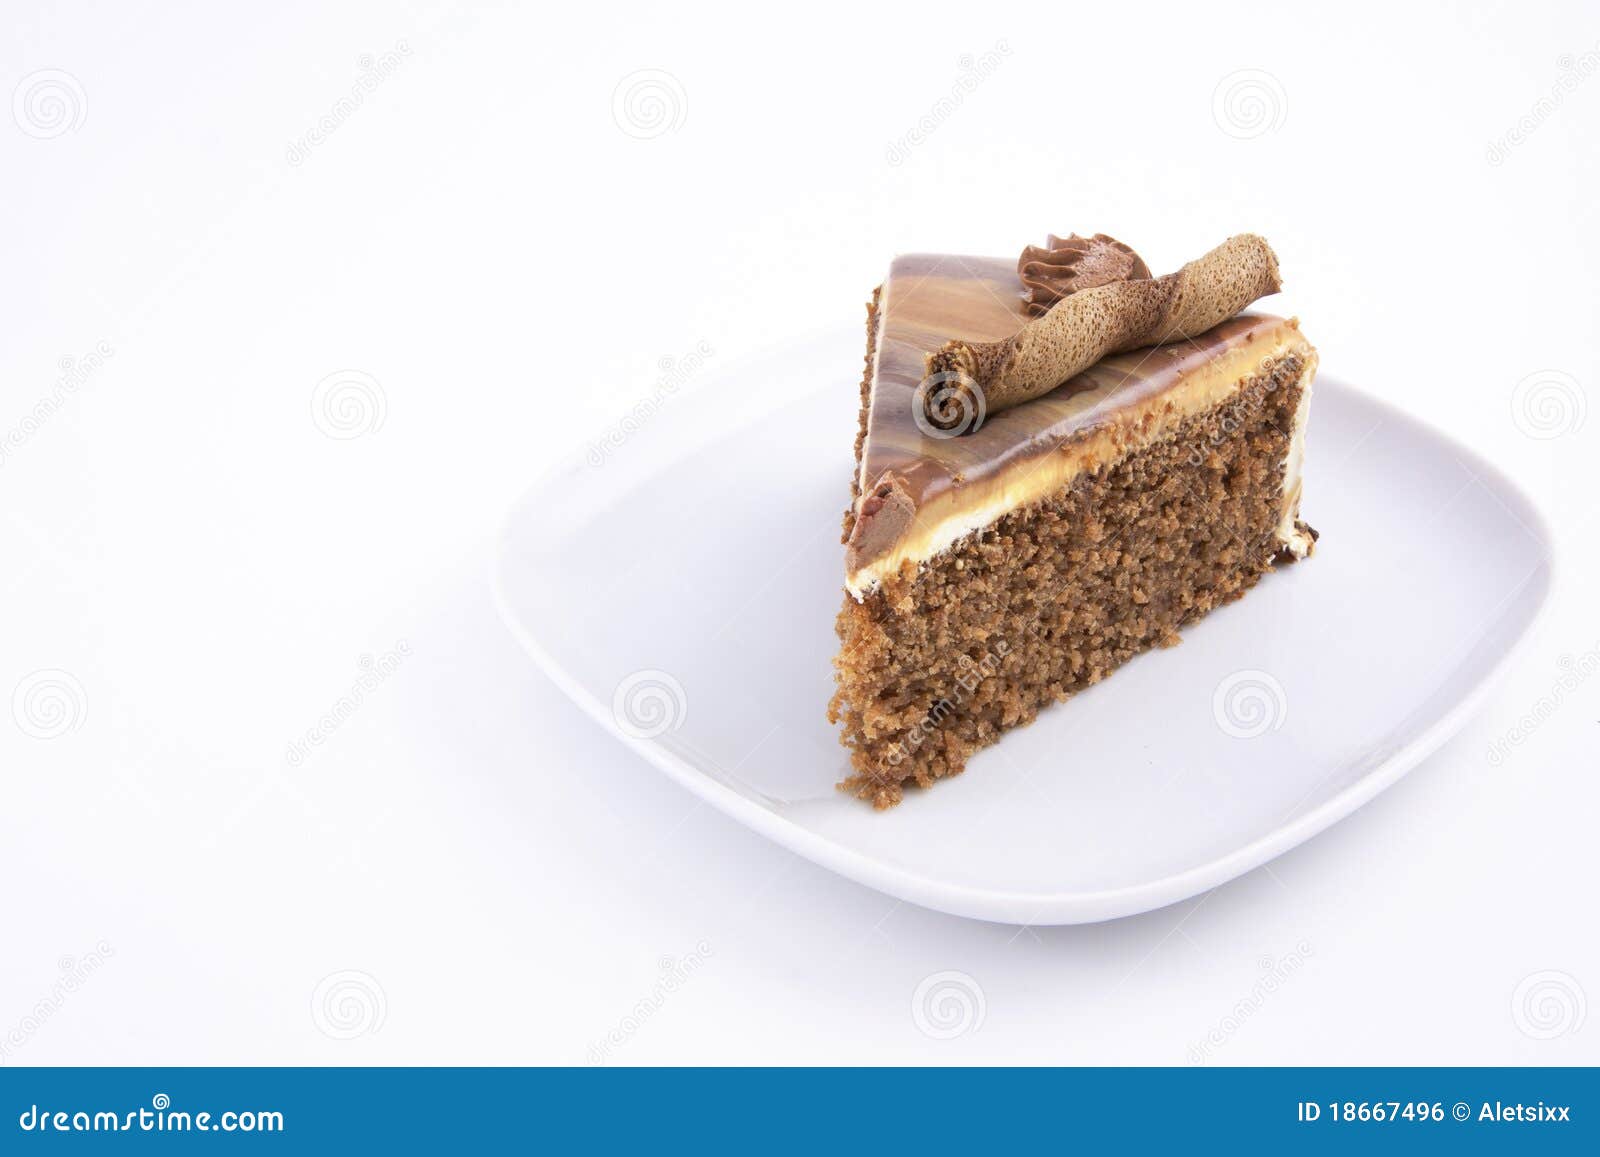 mocha cake slice